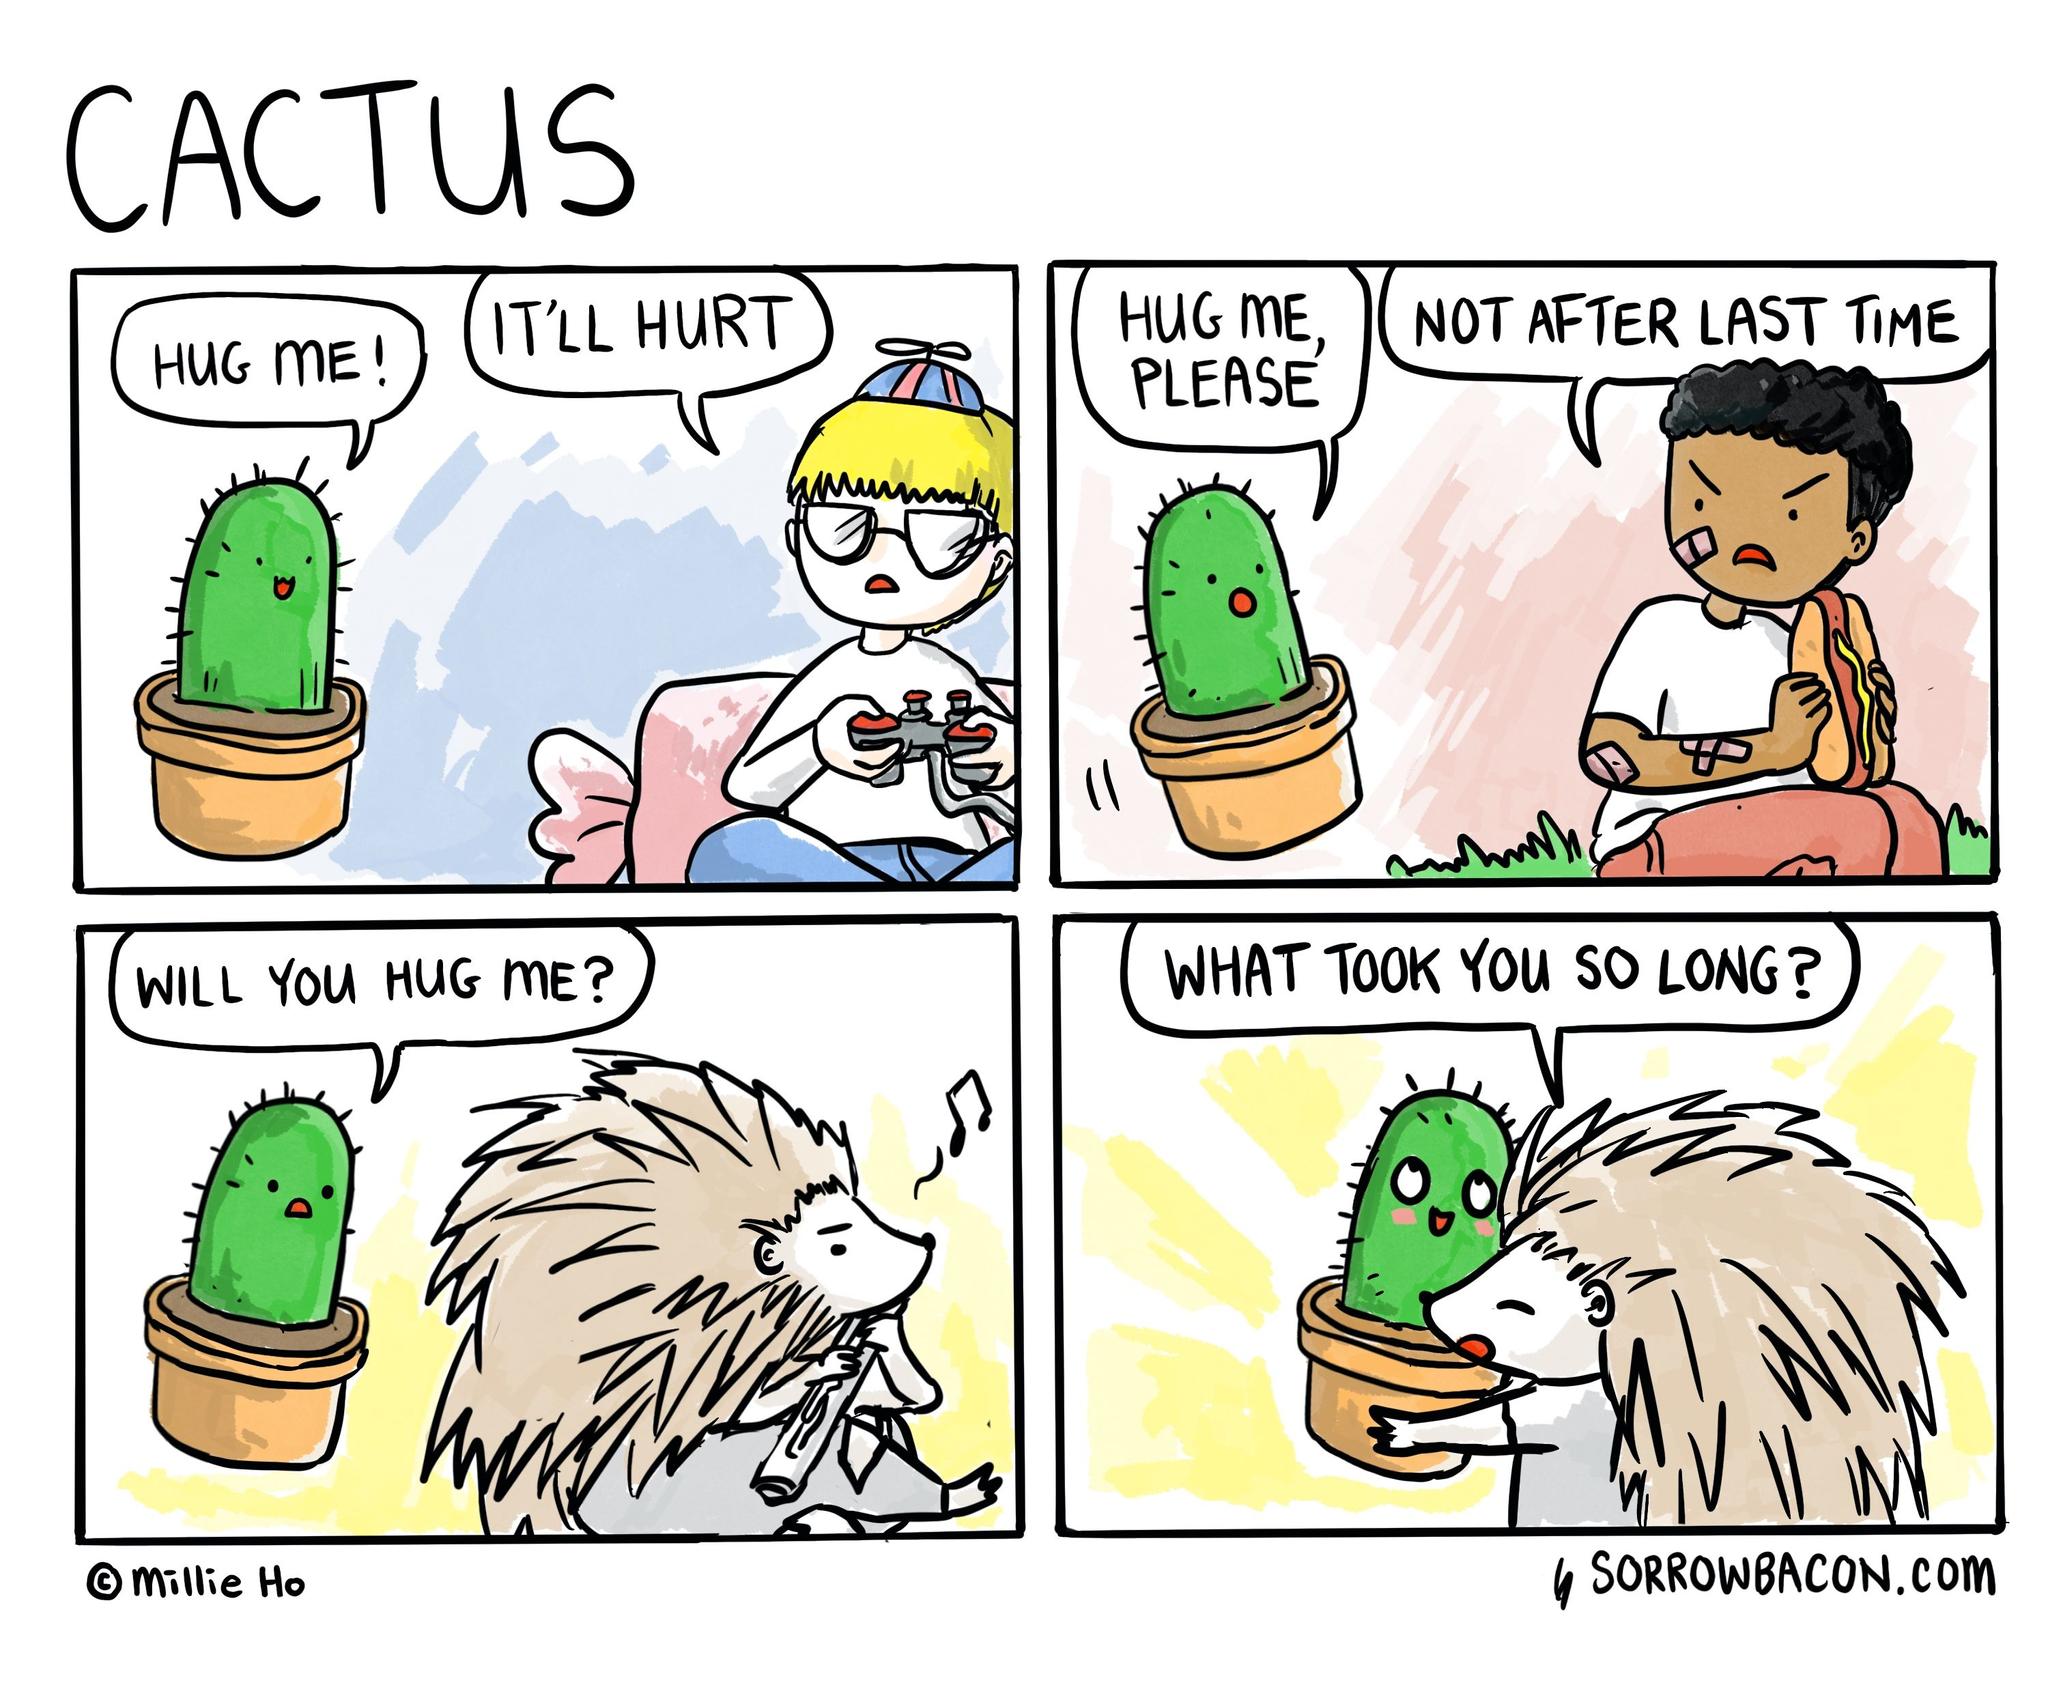 Cactus sorrowbacon comic